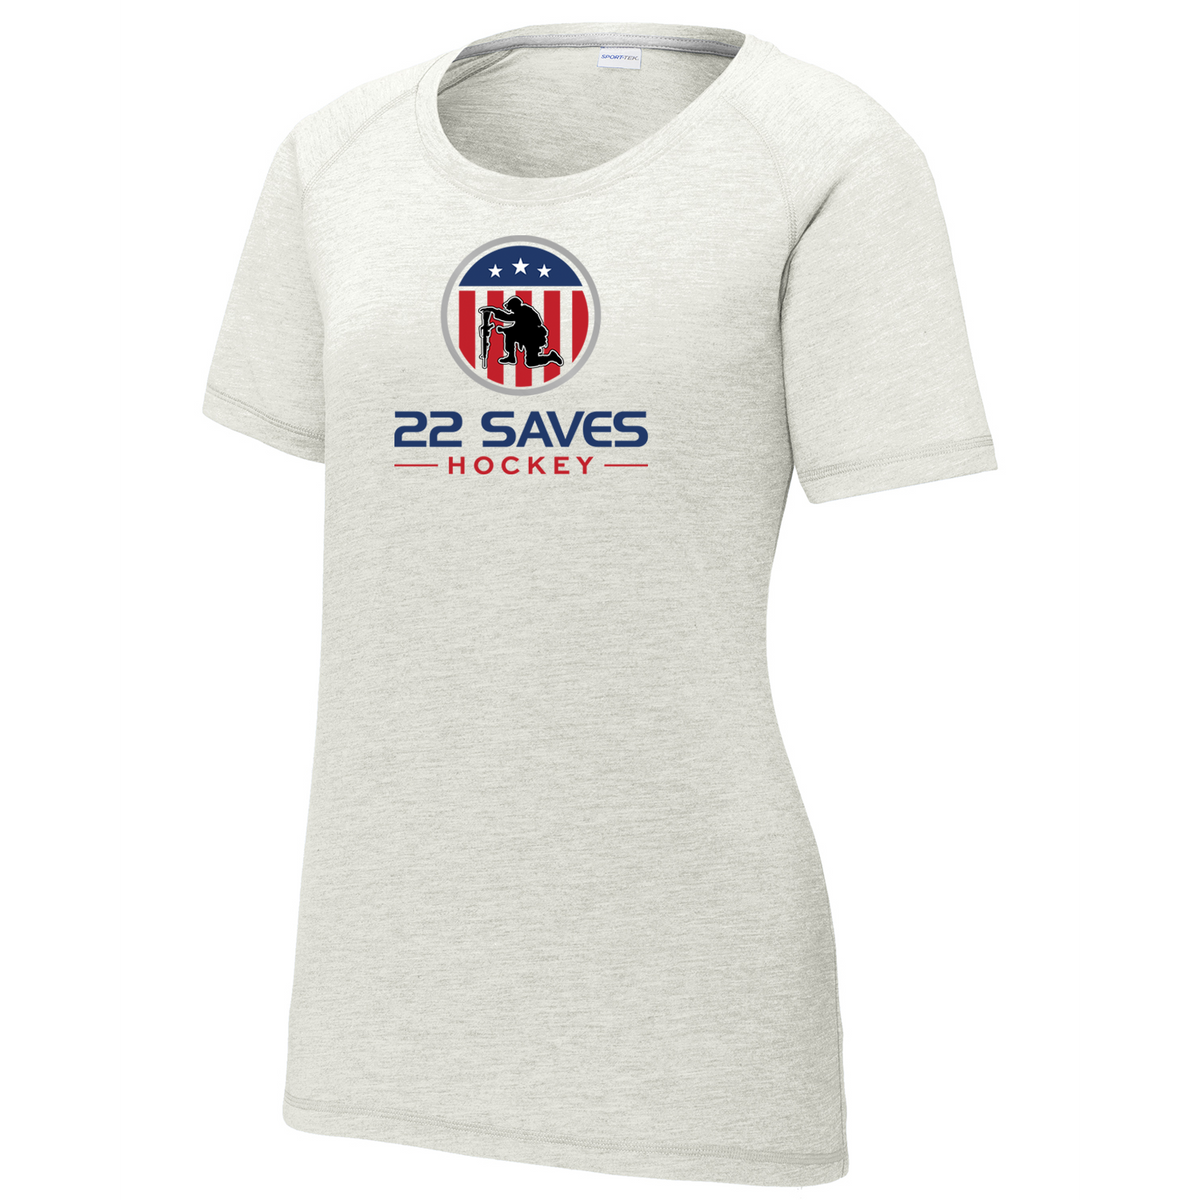 22 Saves Hockey Women's Raglan CottonTouch